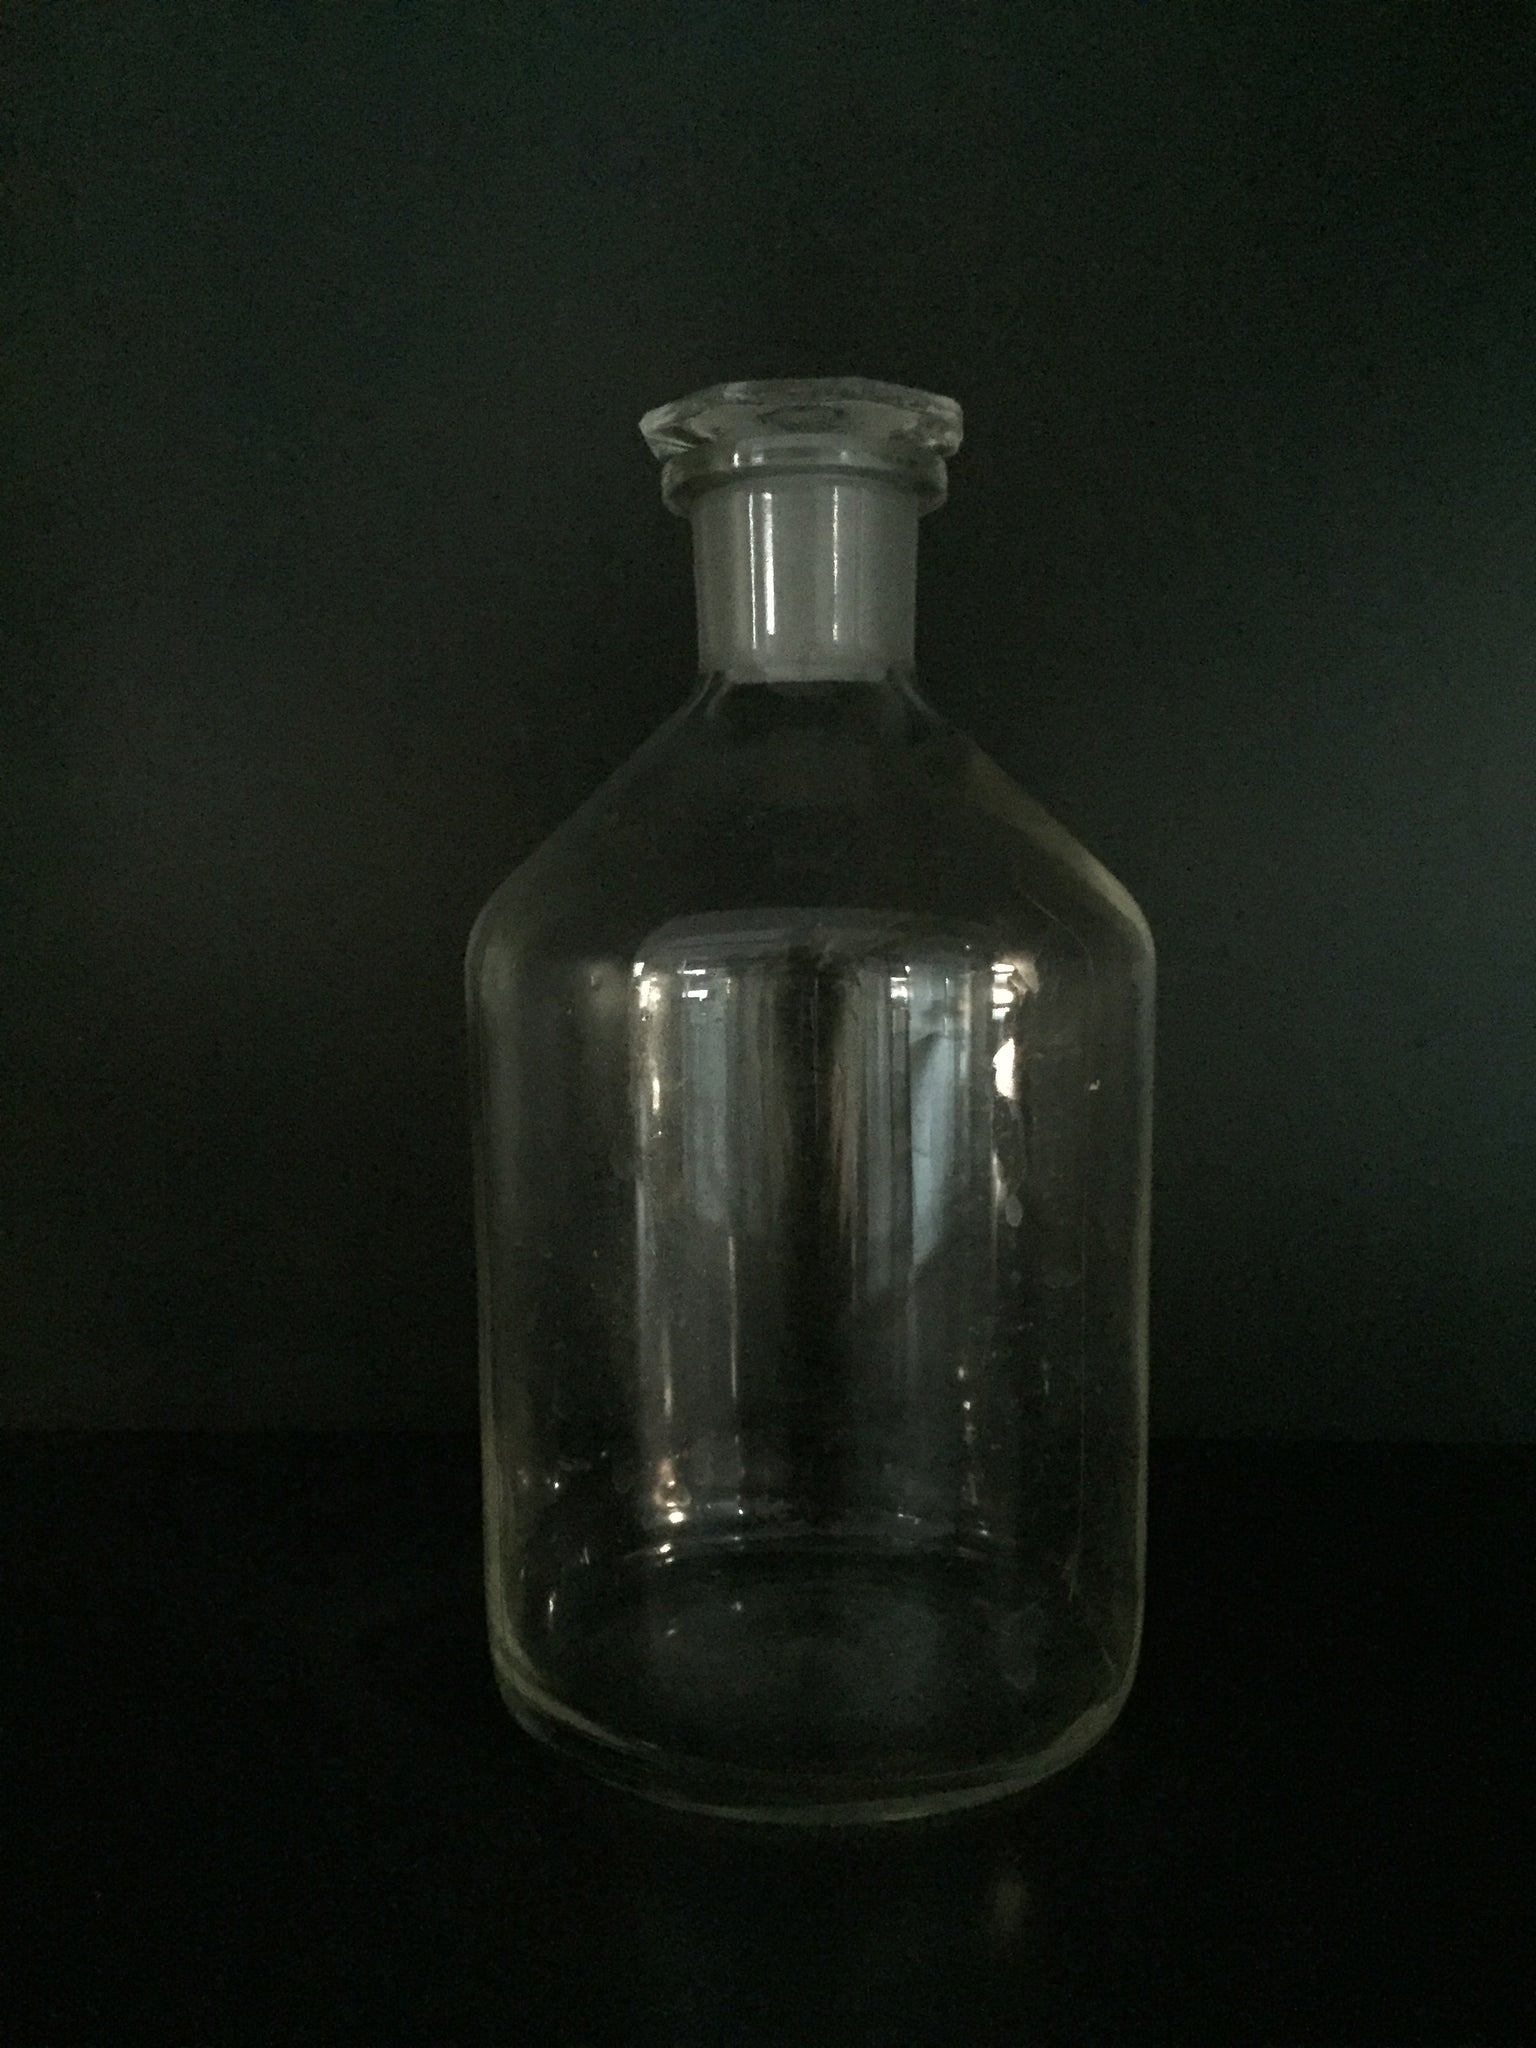 Vintage SCHOTT DURAN 1000ml West German clear glass chemist bottle with glass lid